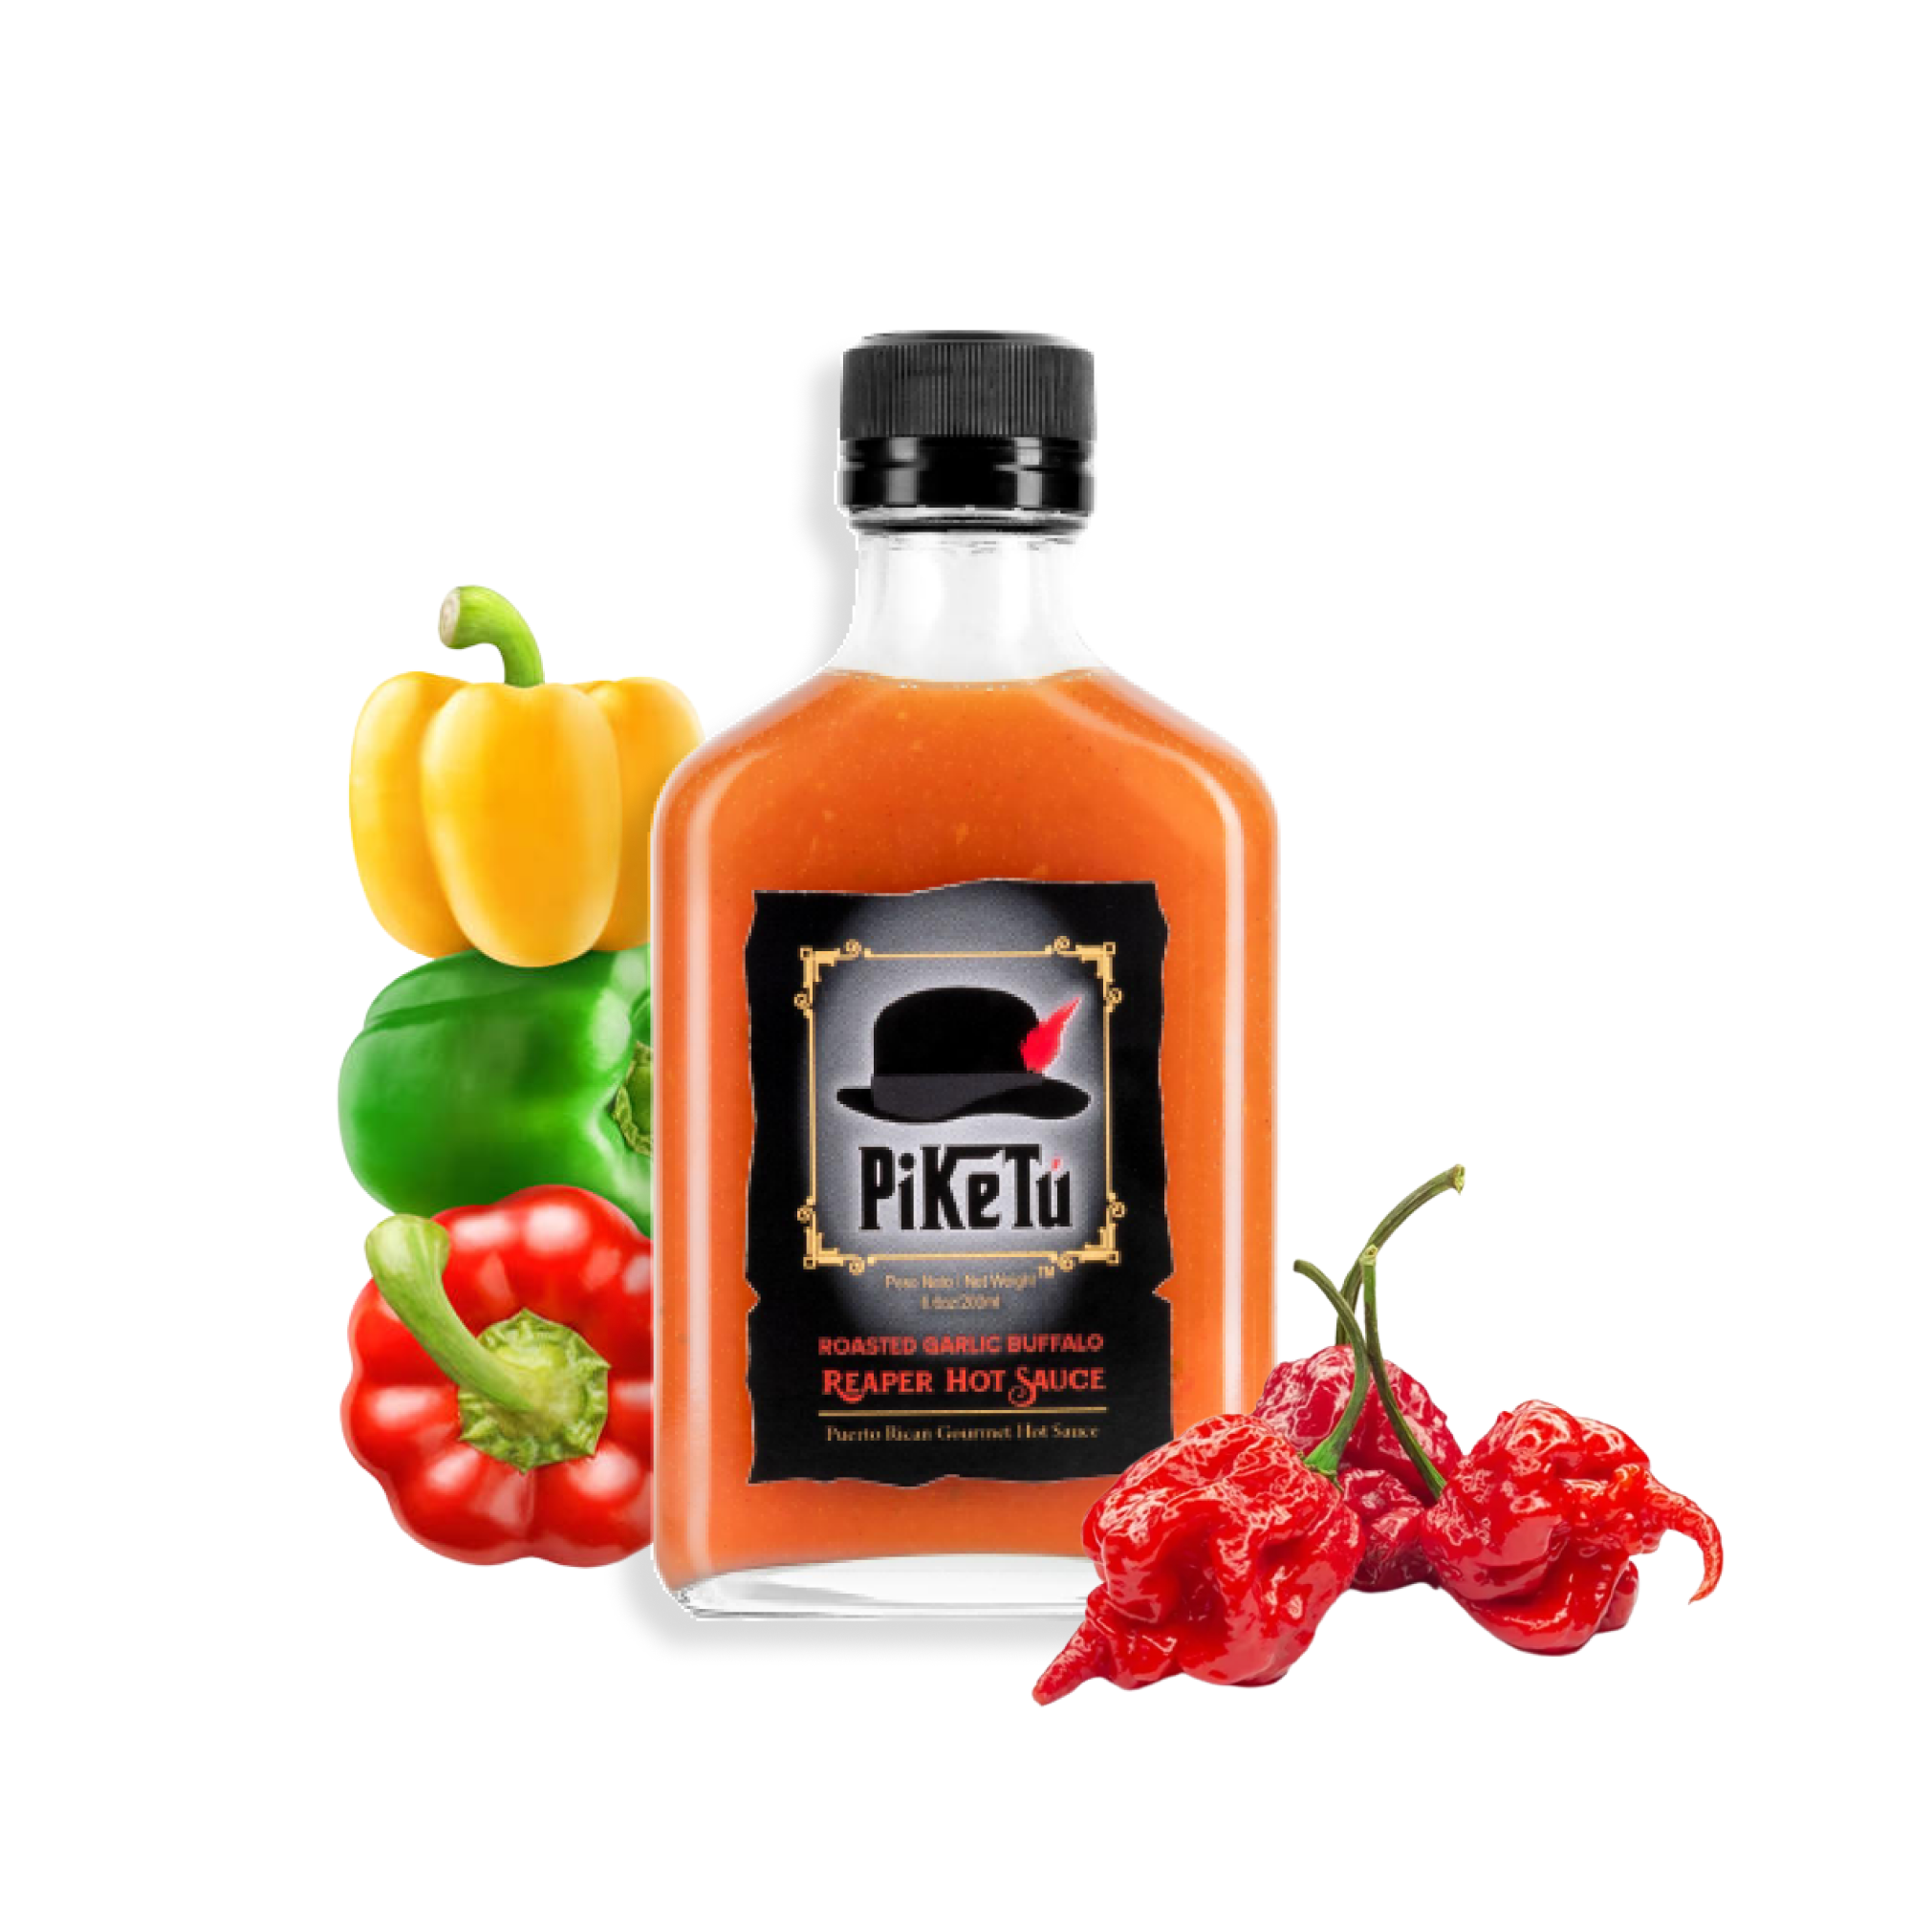 Piketú | Puerto Rican Gourmet Hot Sauce